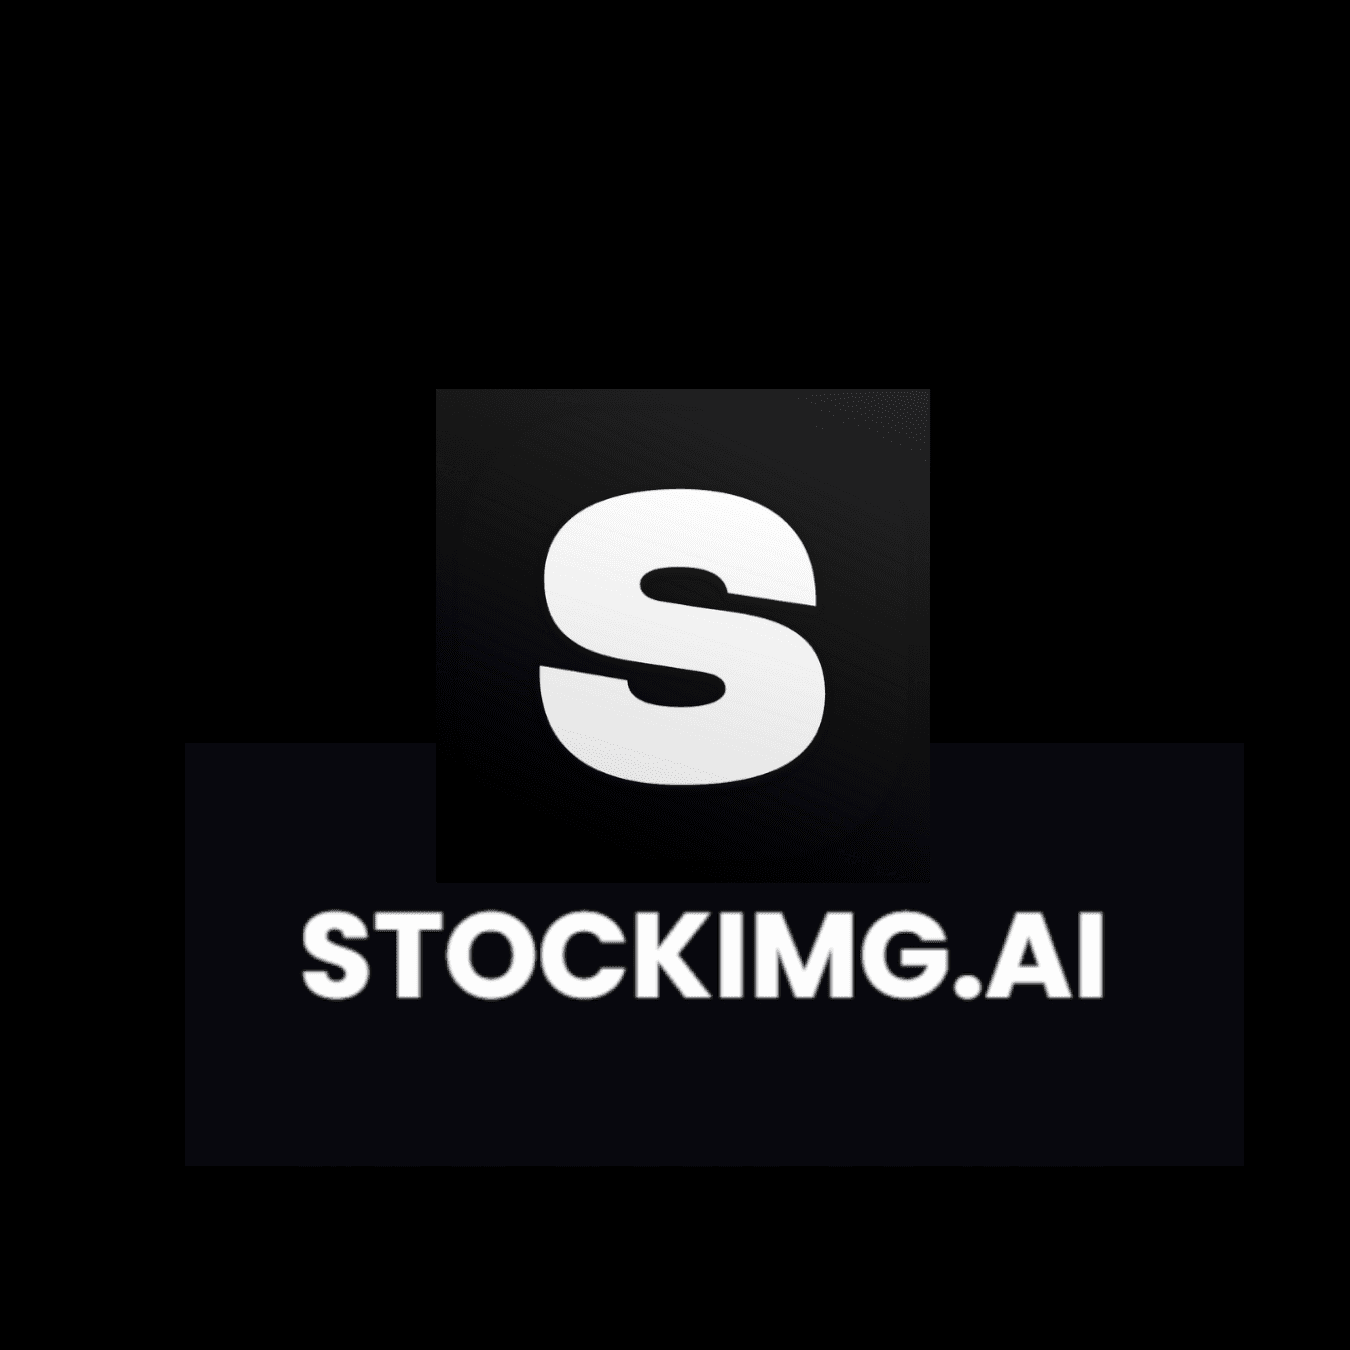 Stockimg.ai AI Categories and Models Explained